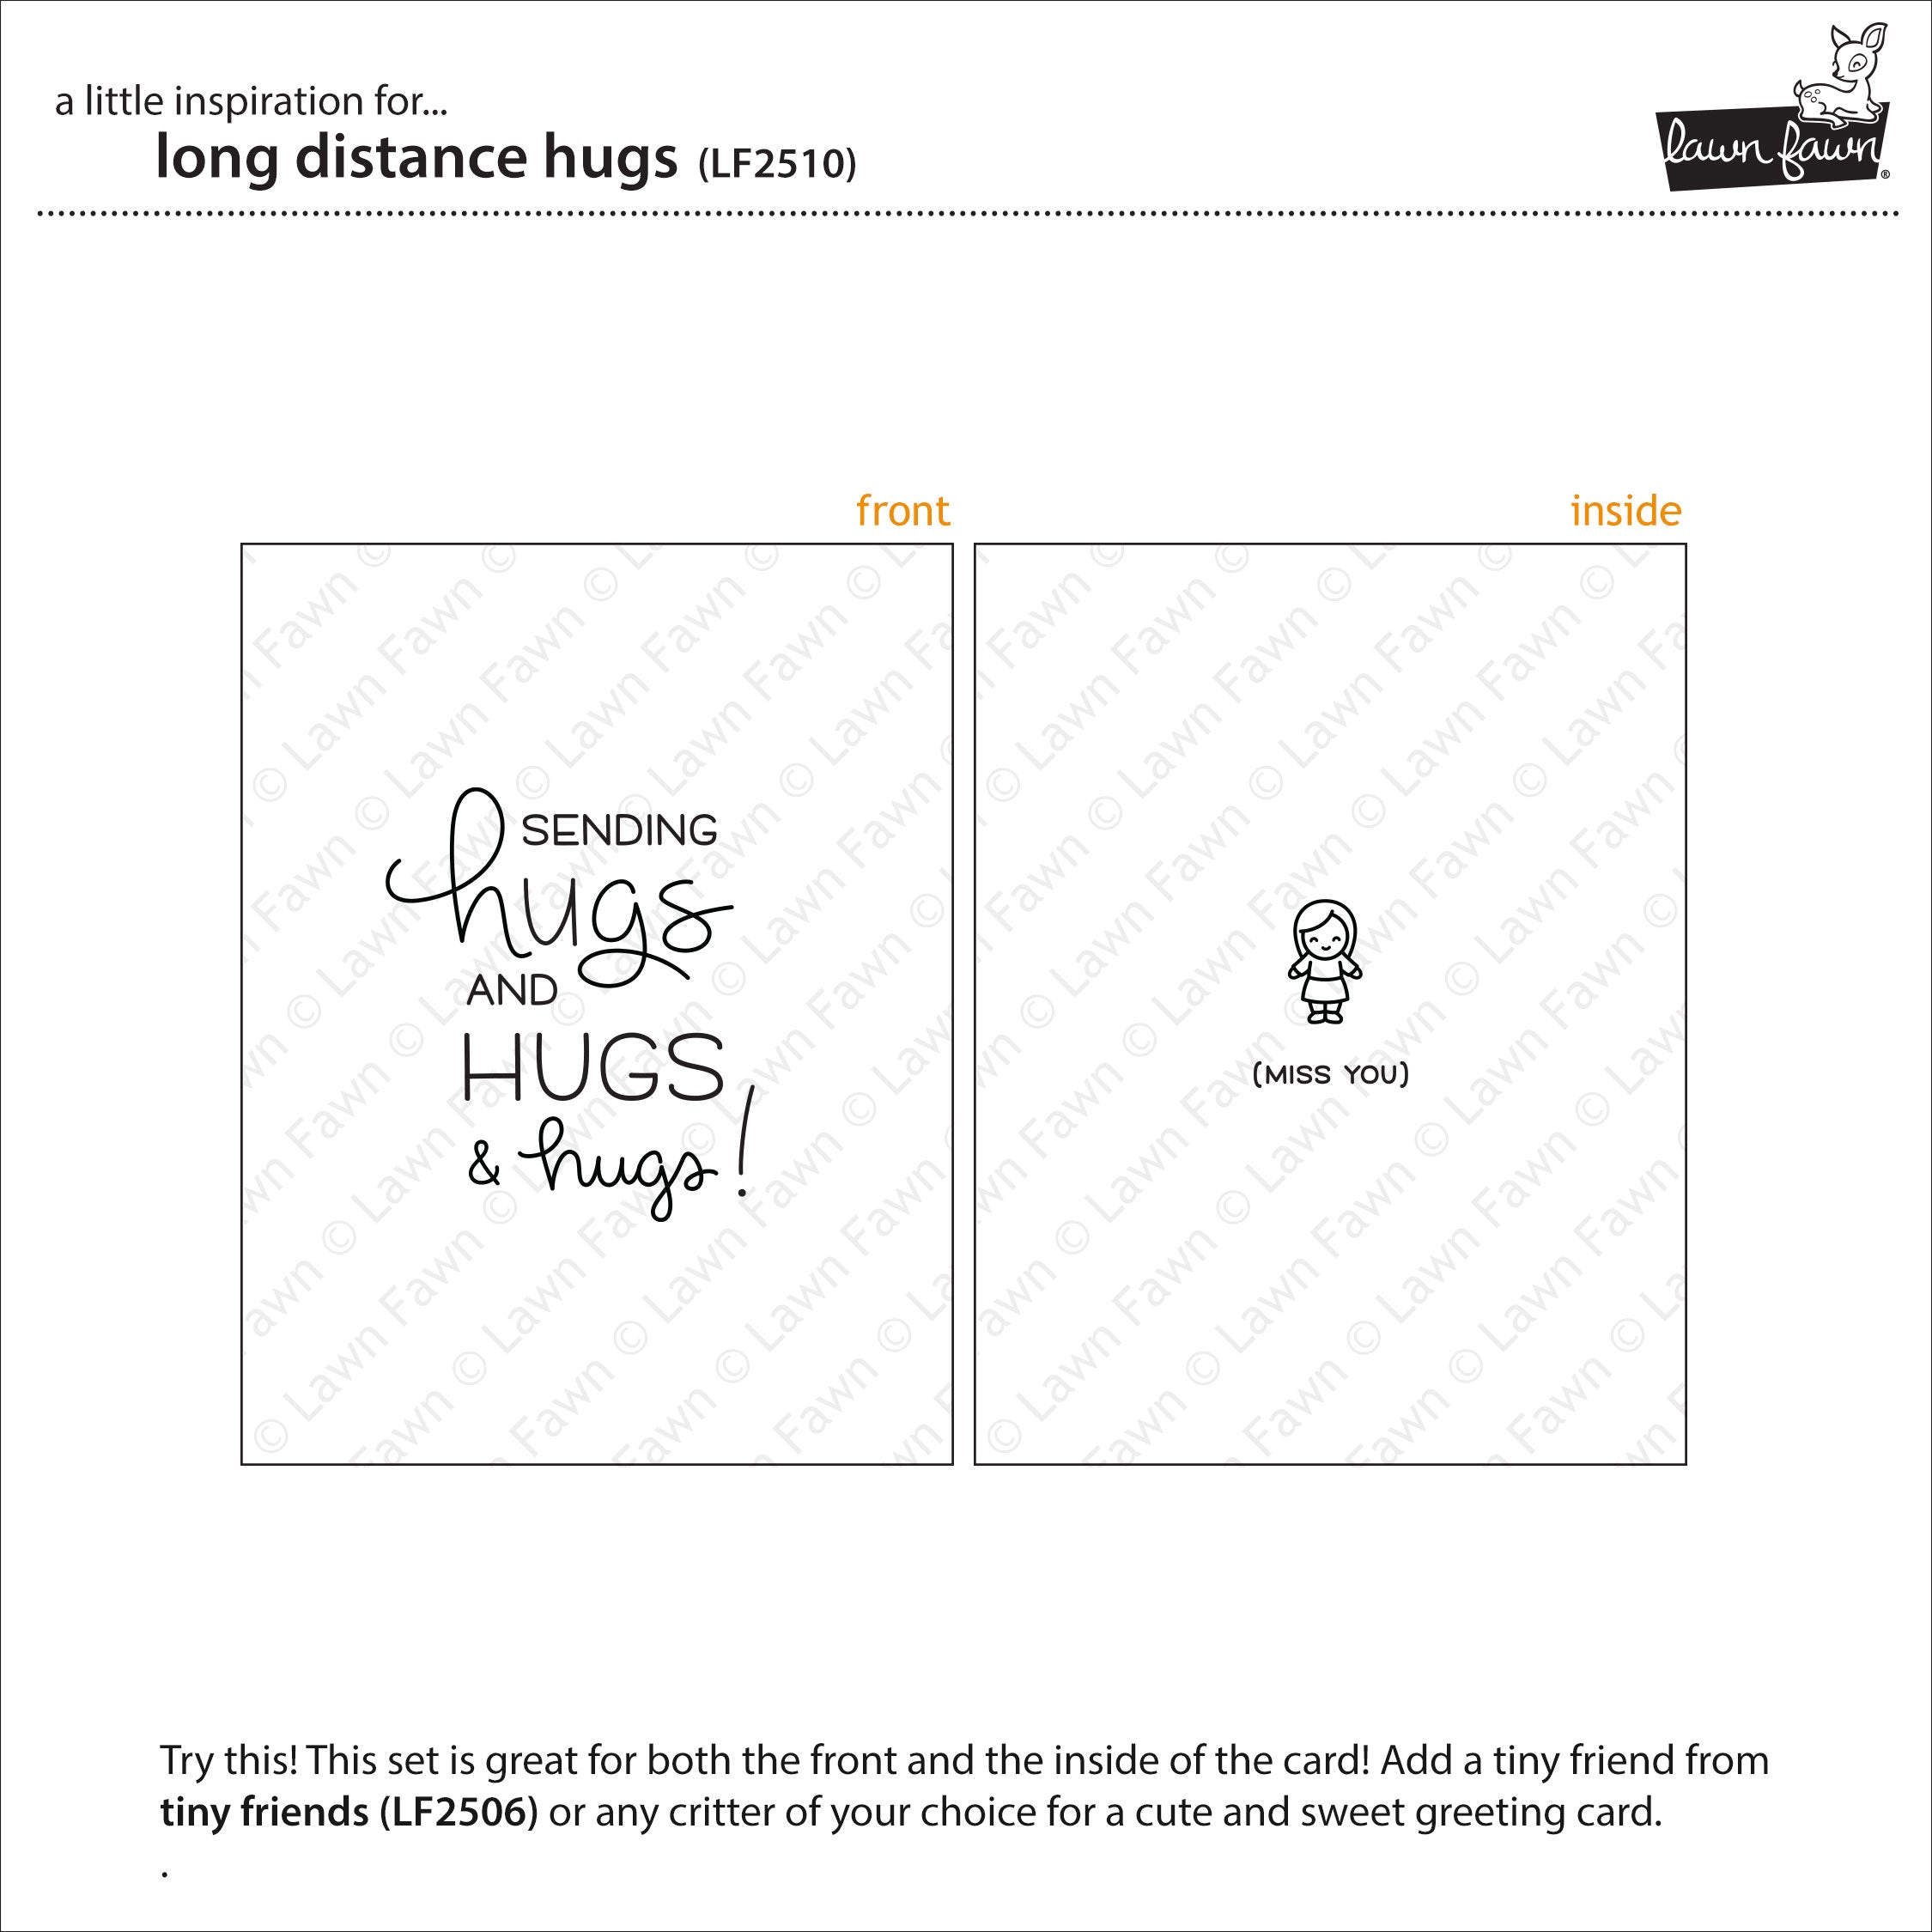 long distance hugs